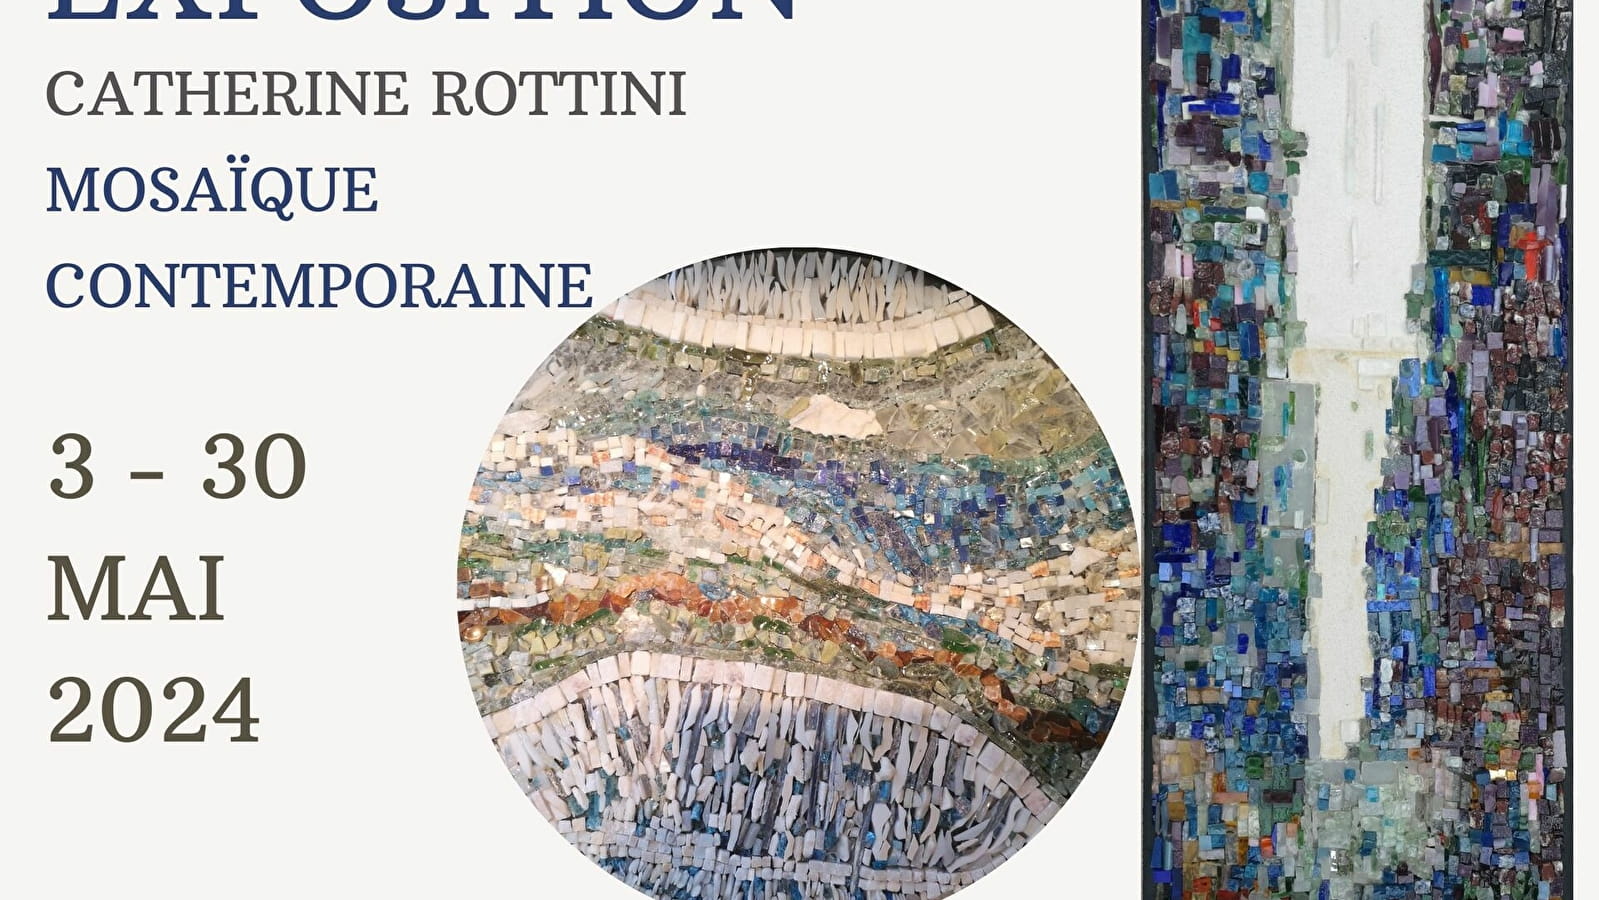 Exposition de mosaïque contemporaine de Catherine ROTTINI